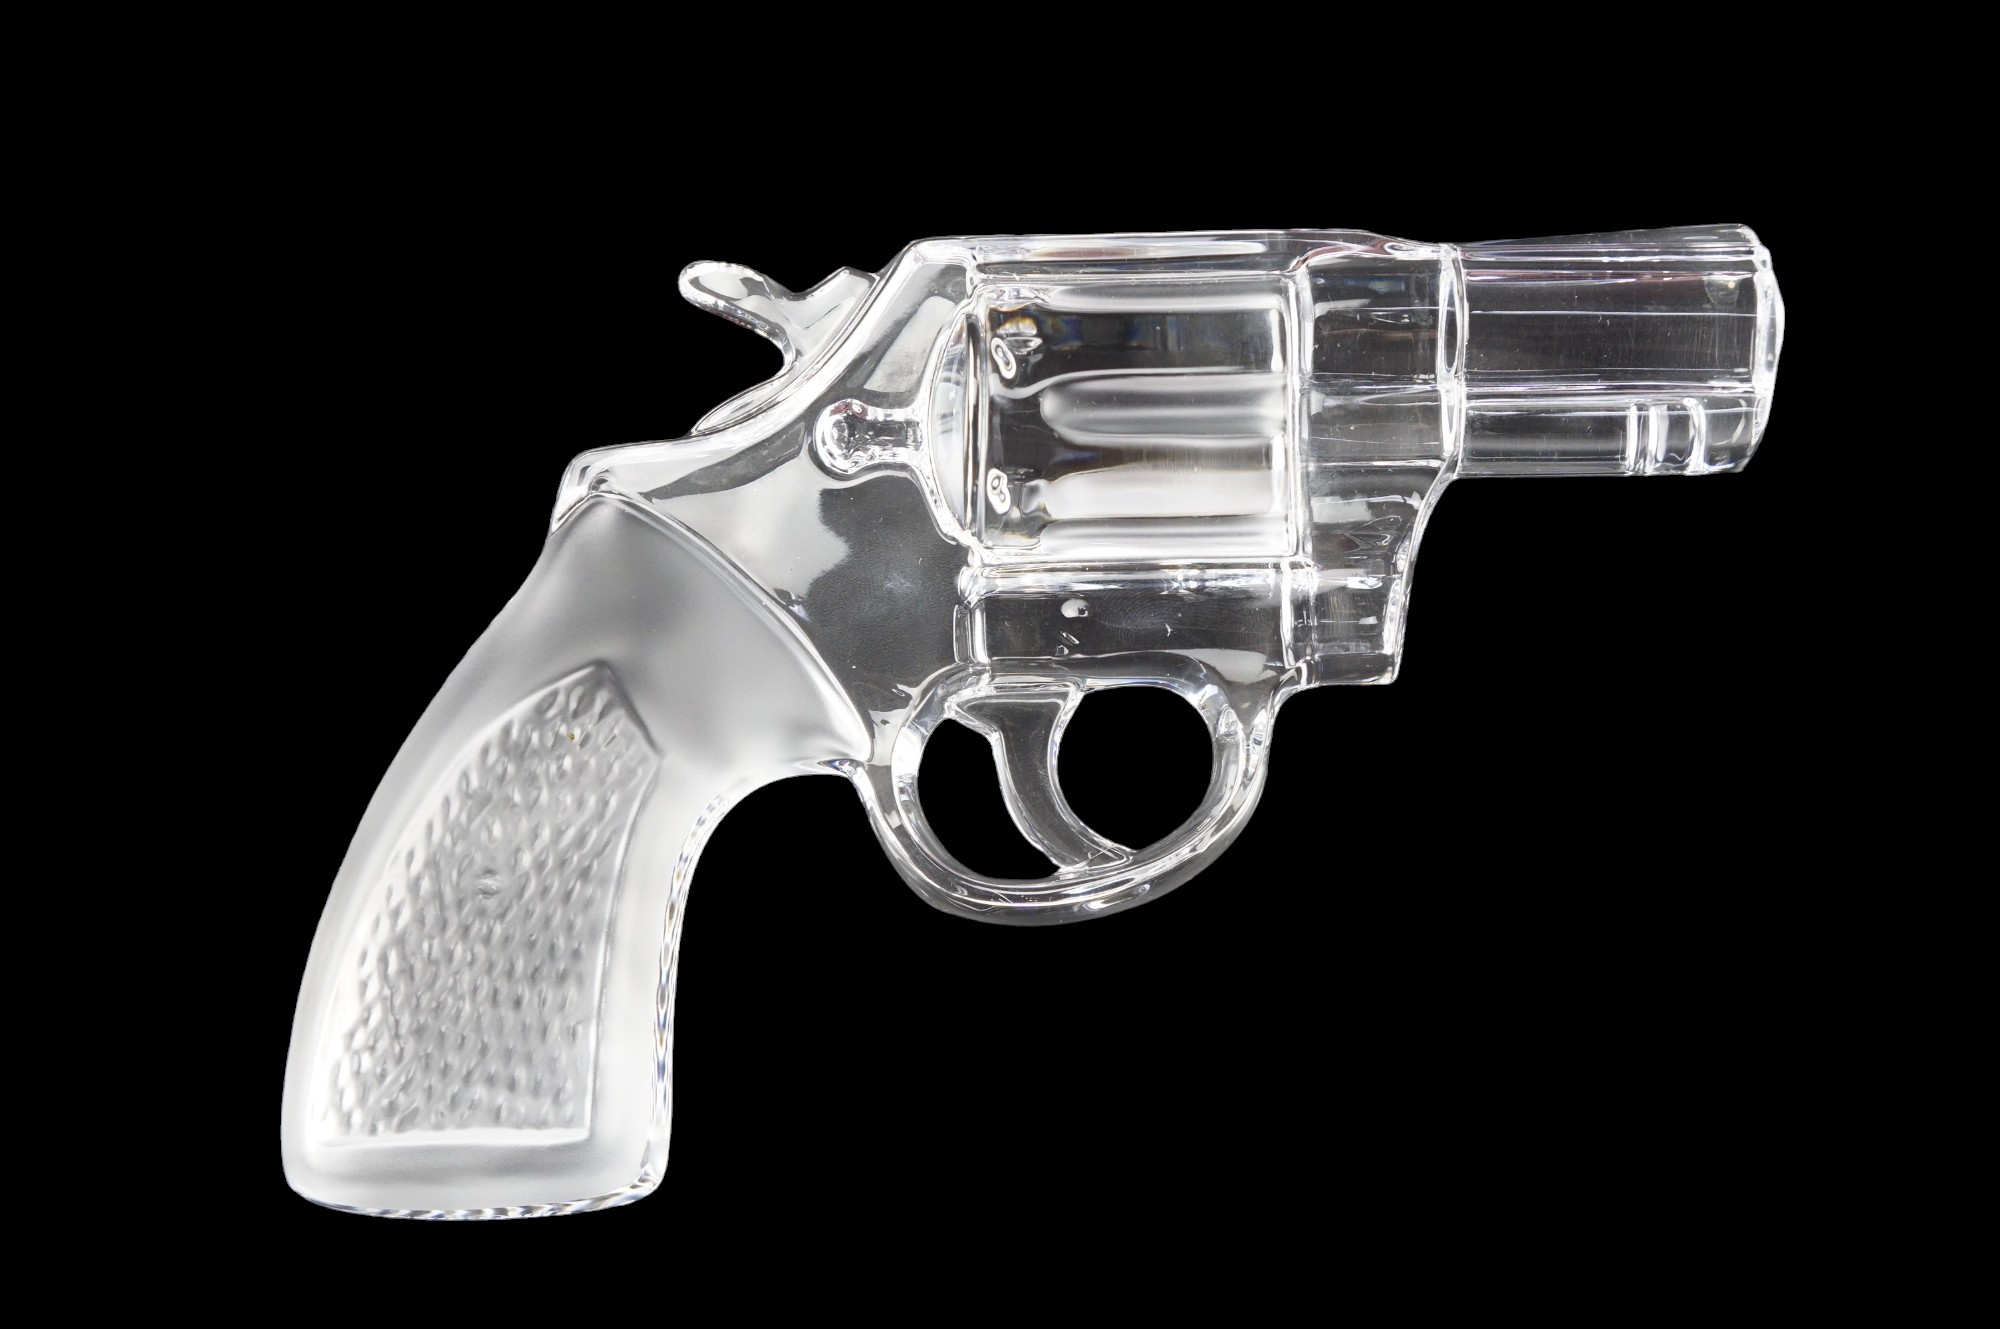 A boxed Royales De Champagne Les Armes snub-nose Smith & Wesson or similar revolver, gun 19.5 cm - Image 4 of 4